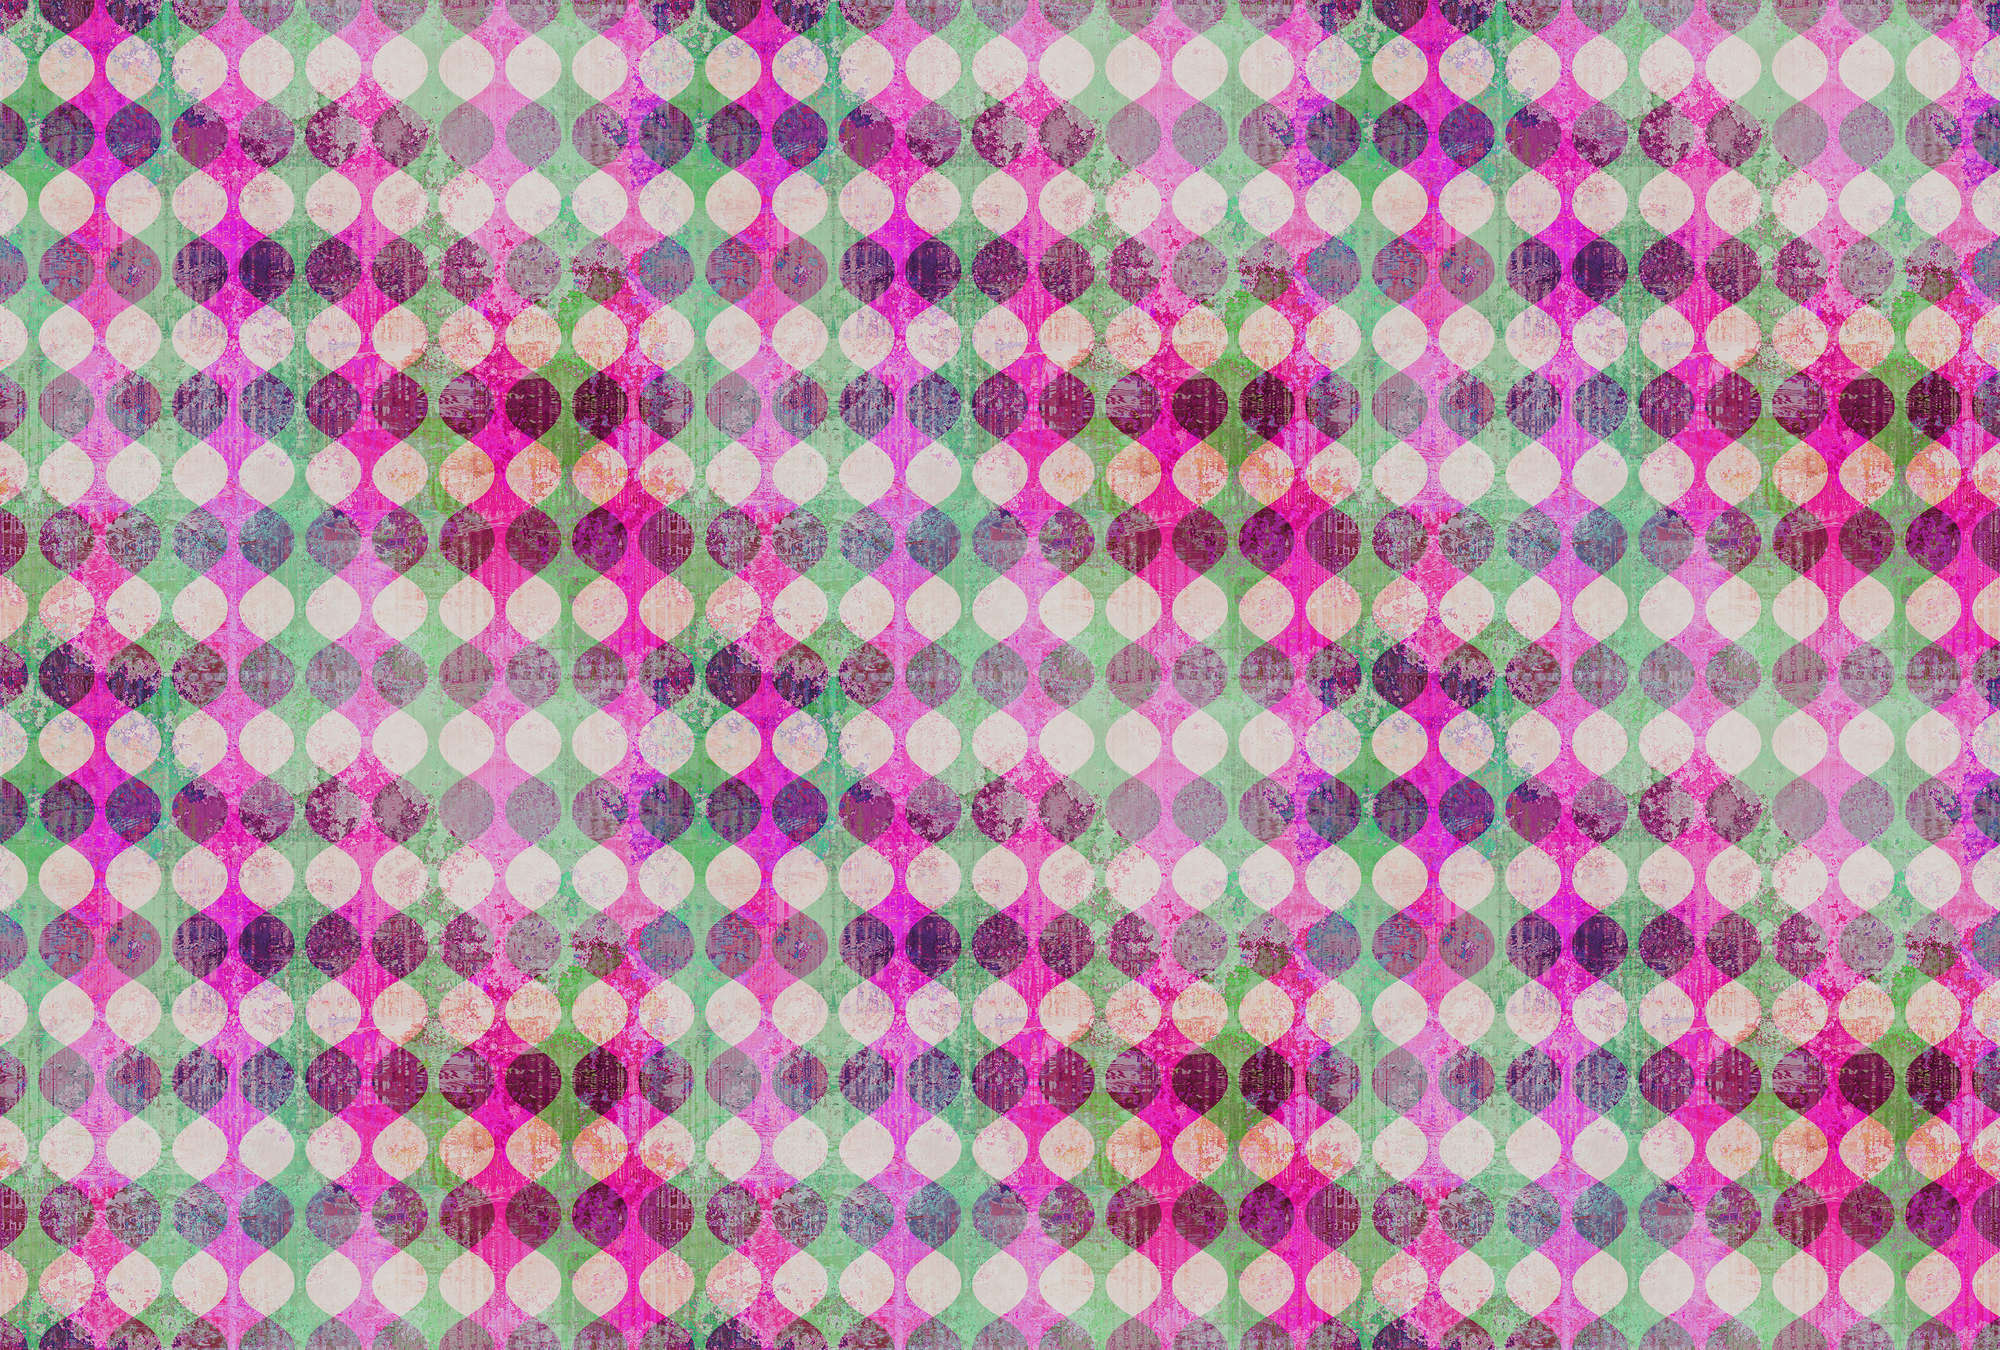             Garland 1 - Retro 70s Wallpaper - Groen, Roze | Pearl Smooth Vliesbehang
        